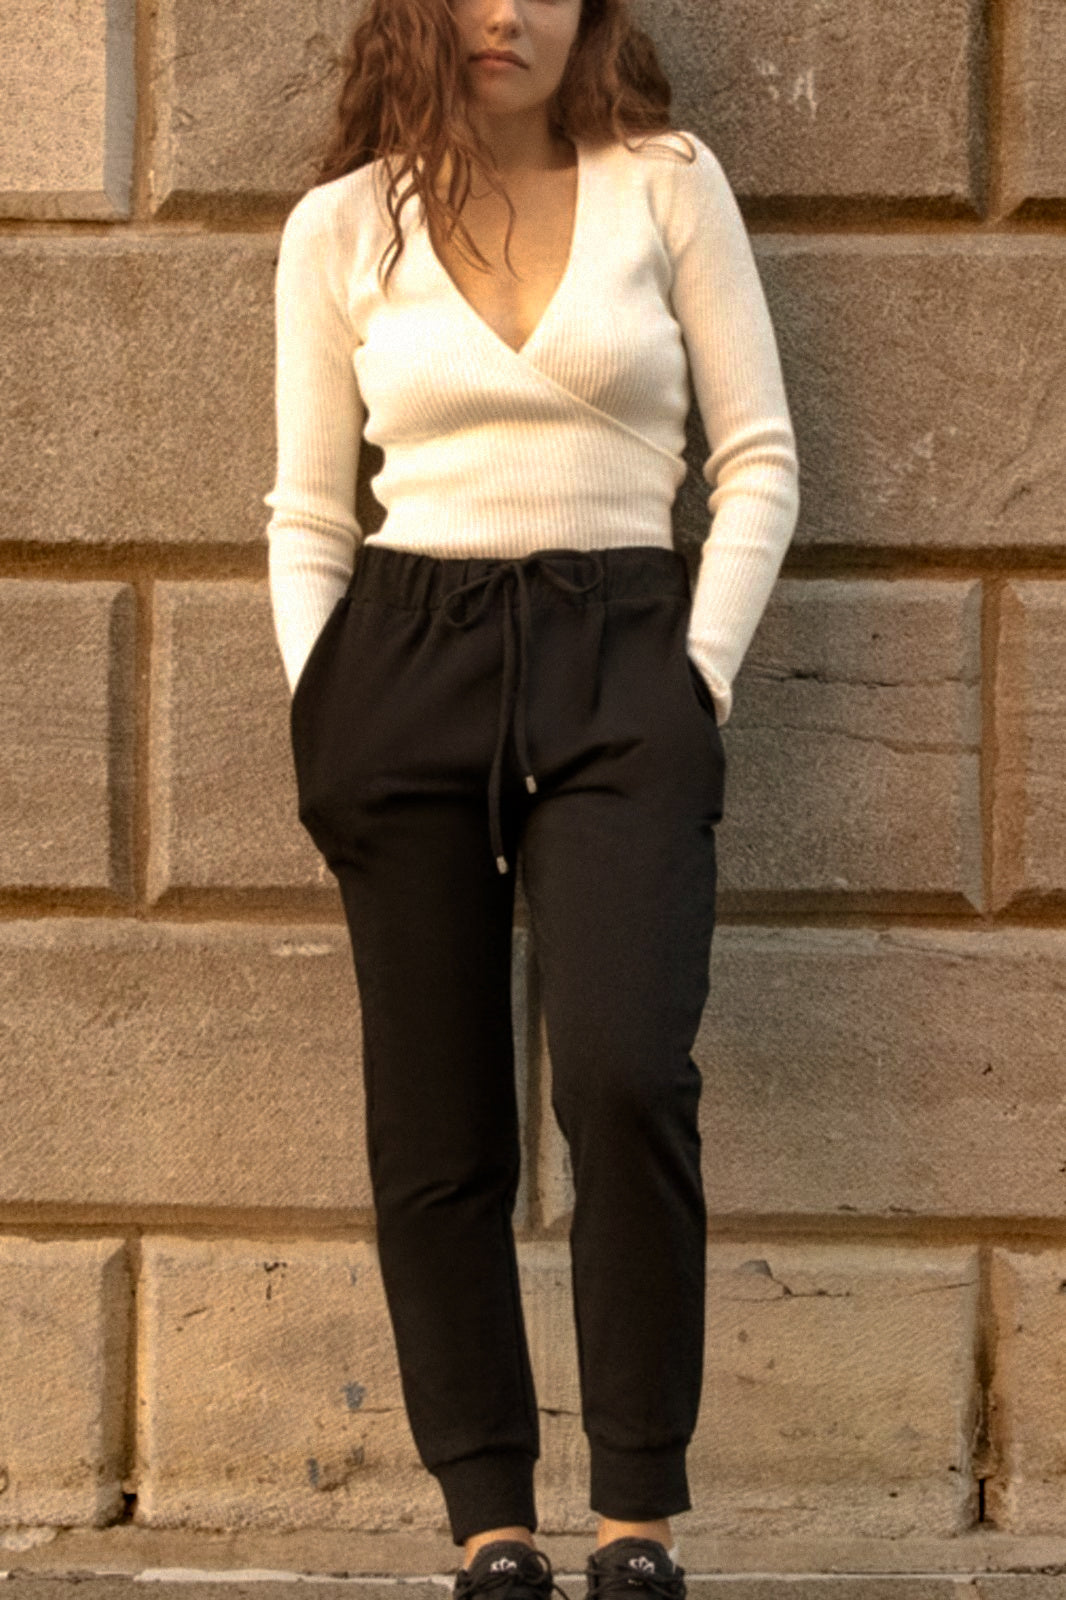 Angie Chic Quality 95% Cotton Sweatpants Drawstring Black (Sizes: S - XL) (Sale Price: $56.94 CAD)